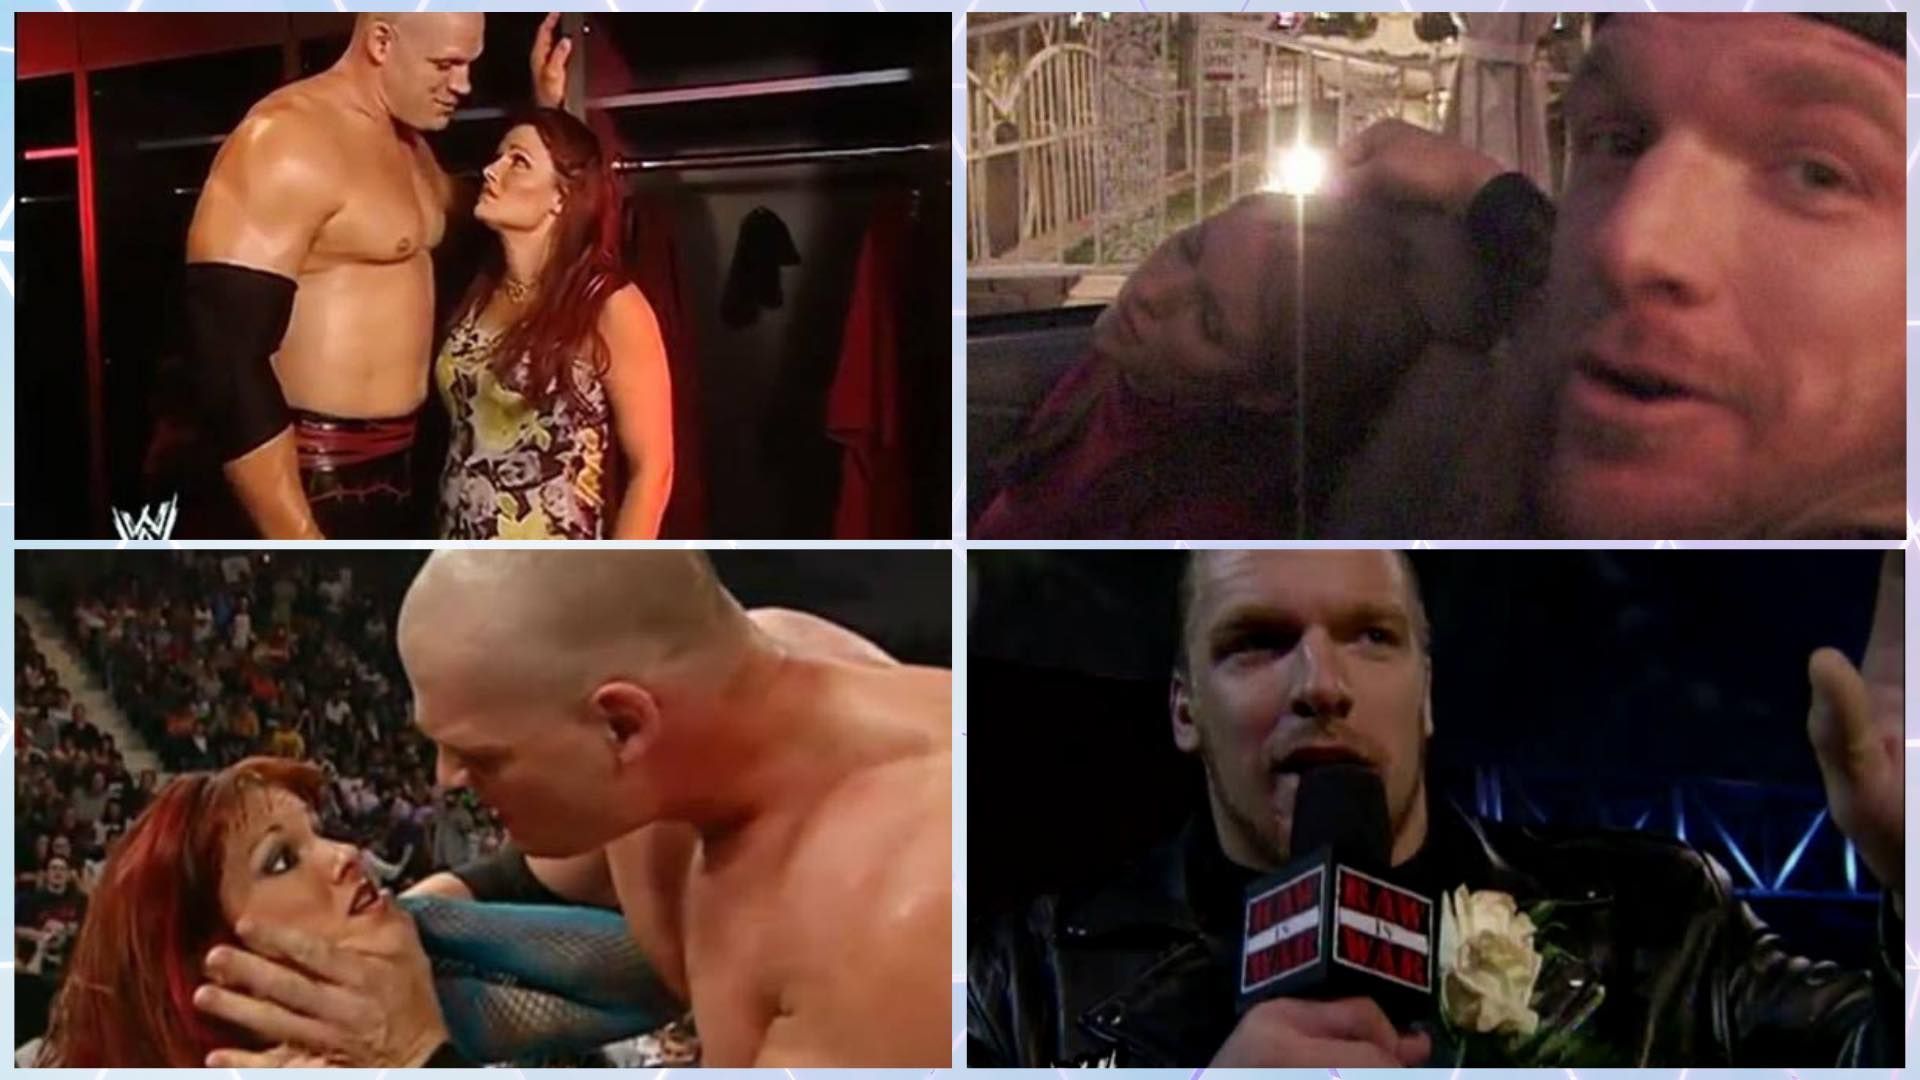 WWE Superstars Kane and Lita and real-life couple Triple H and Stephanie McMahon